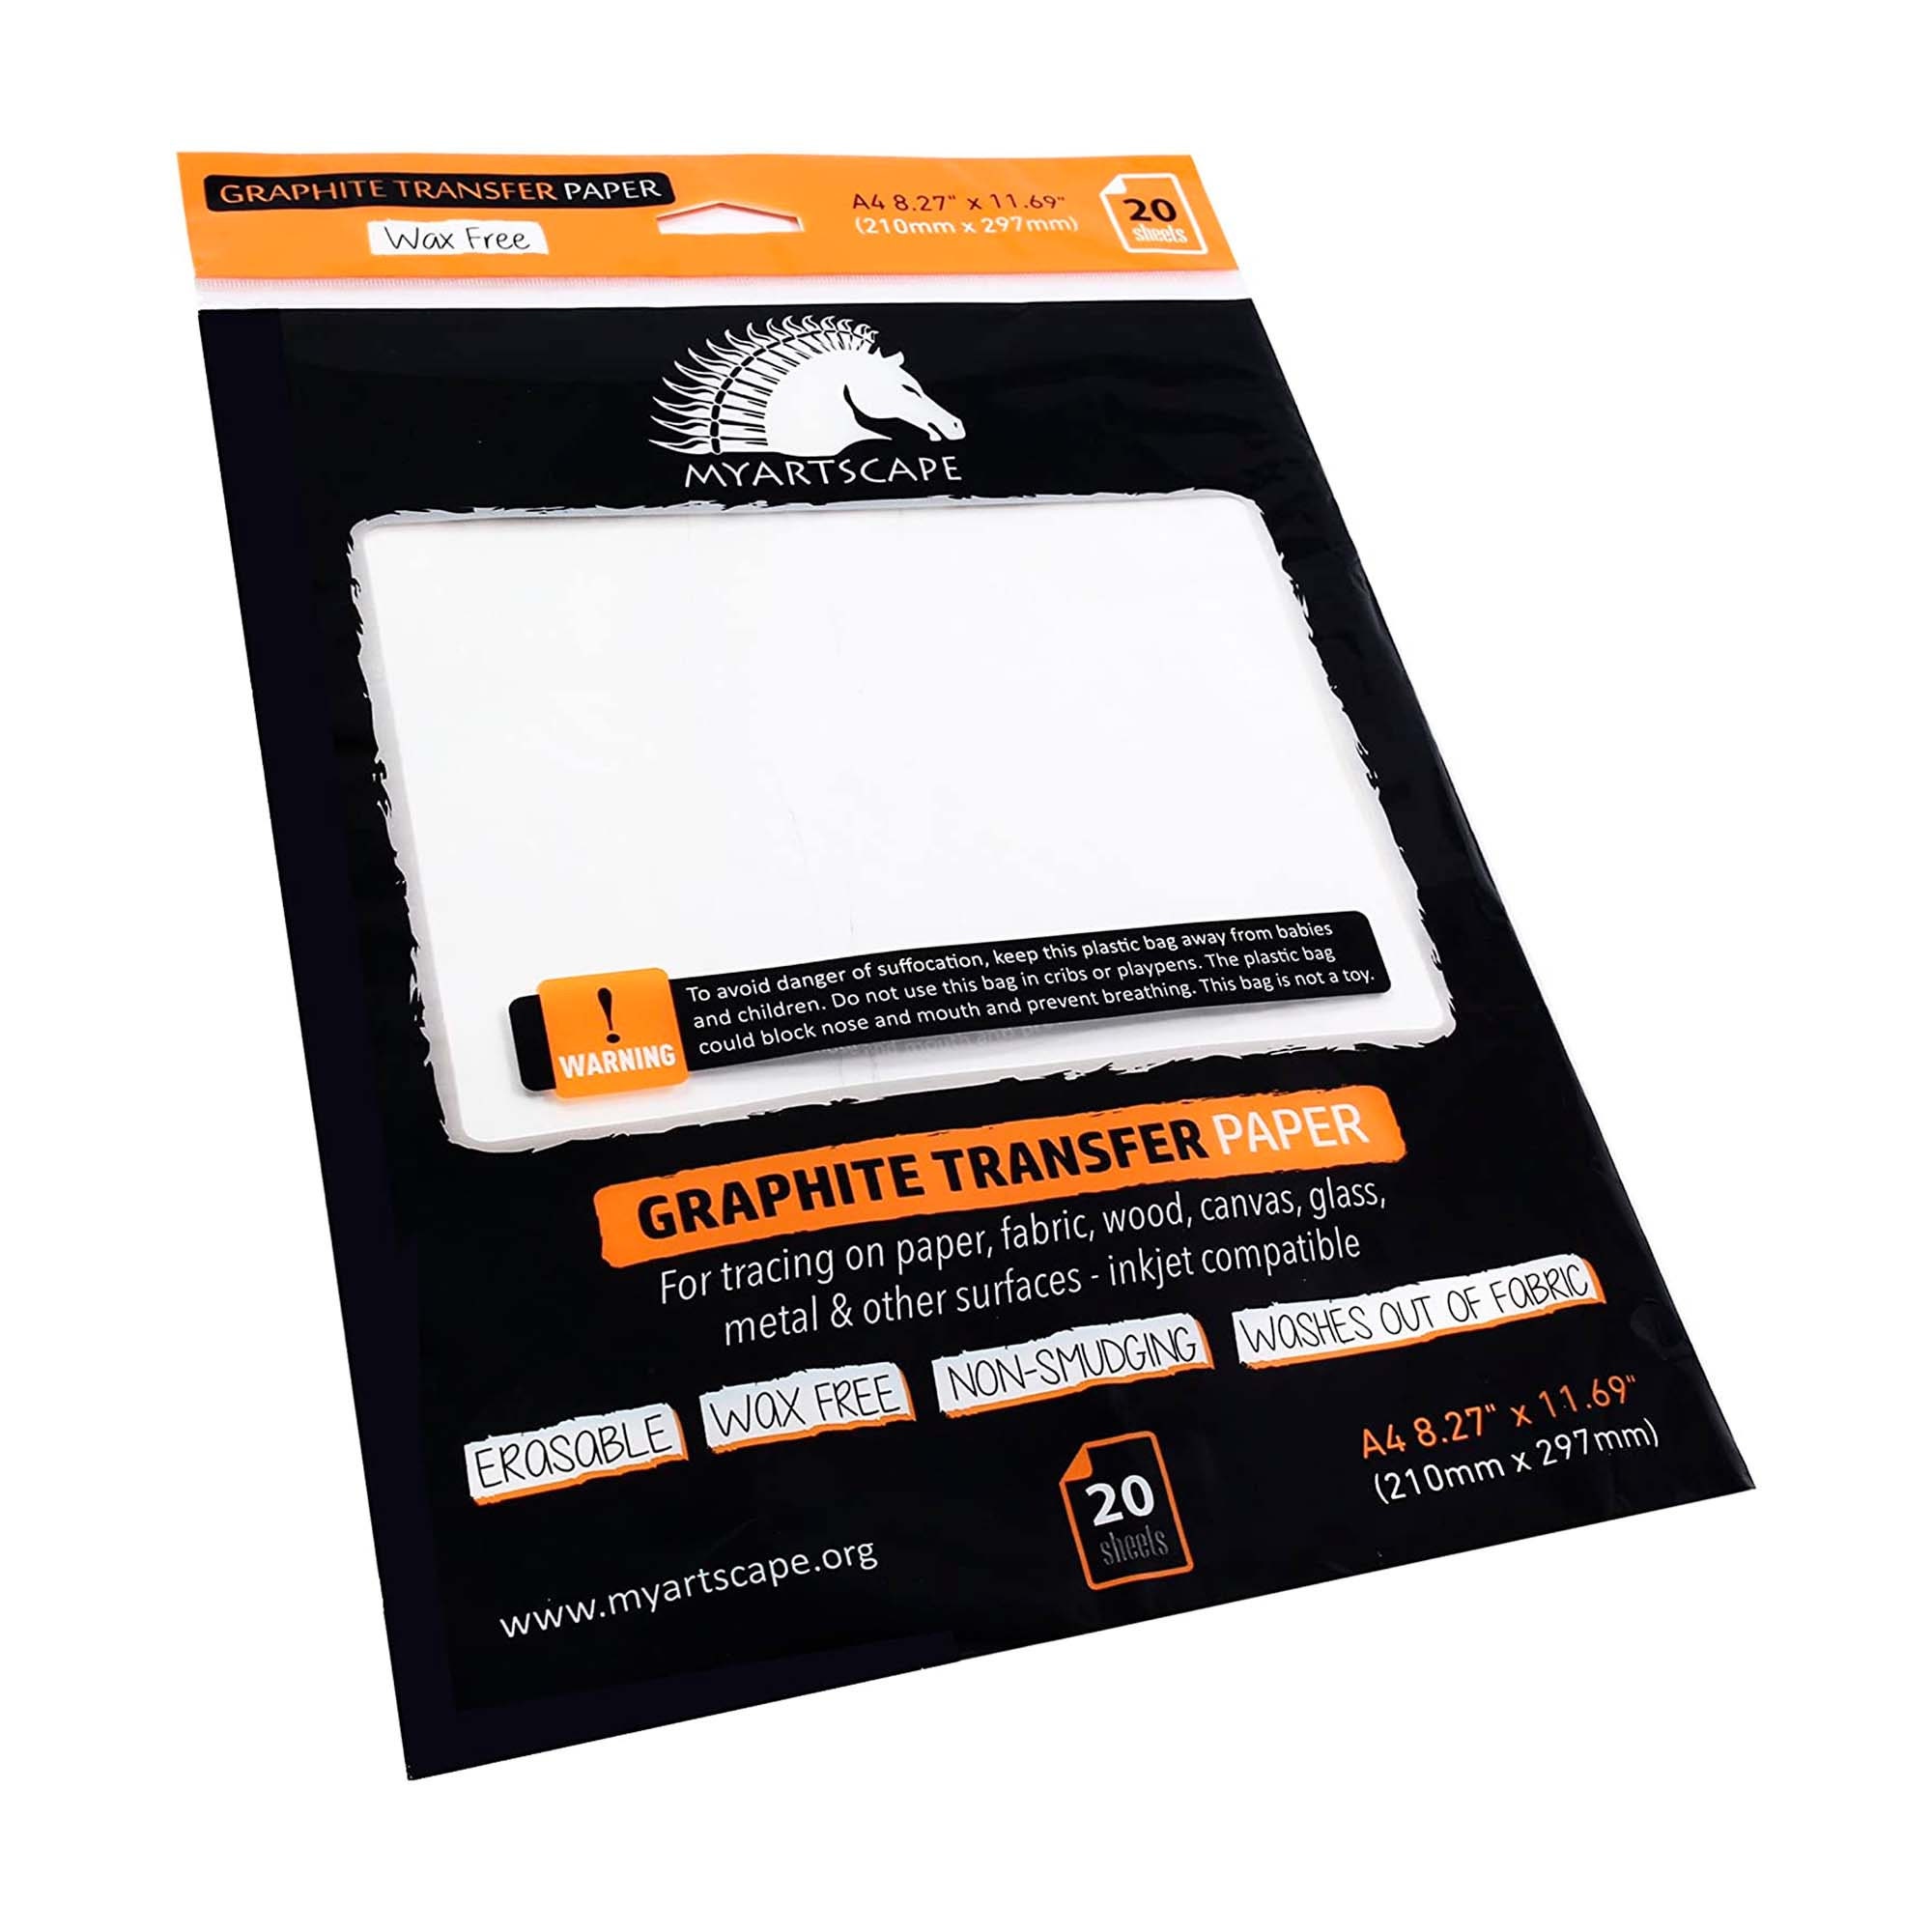 Graphite Transfer Paper, 20 White Sheets Wax Free Erasable 